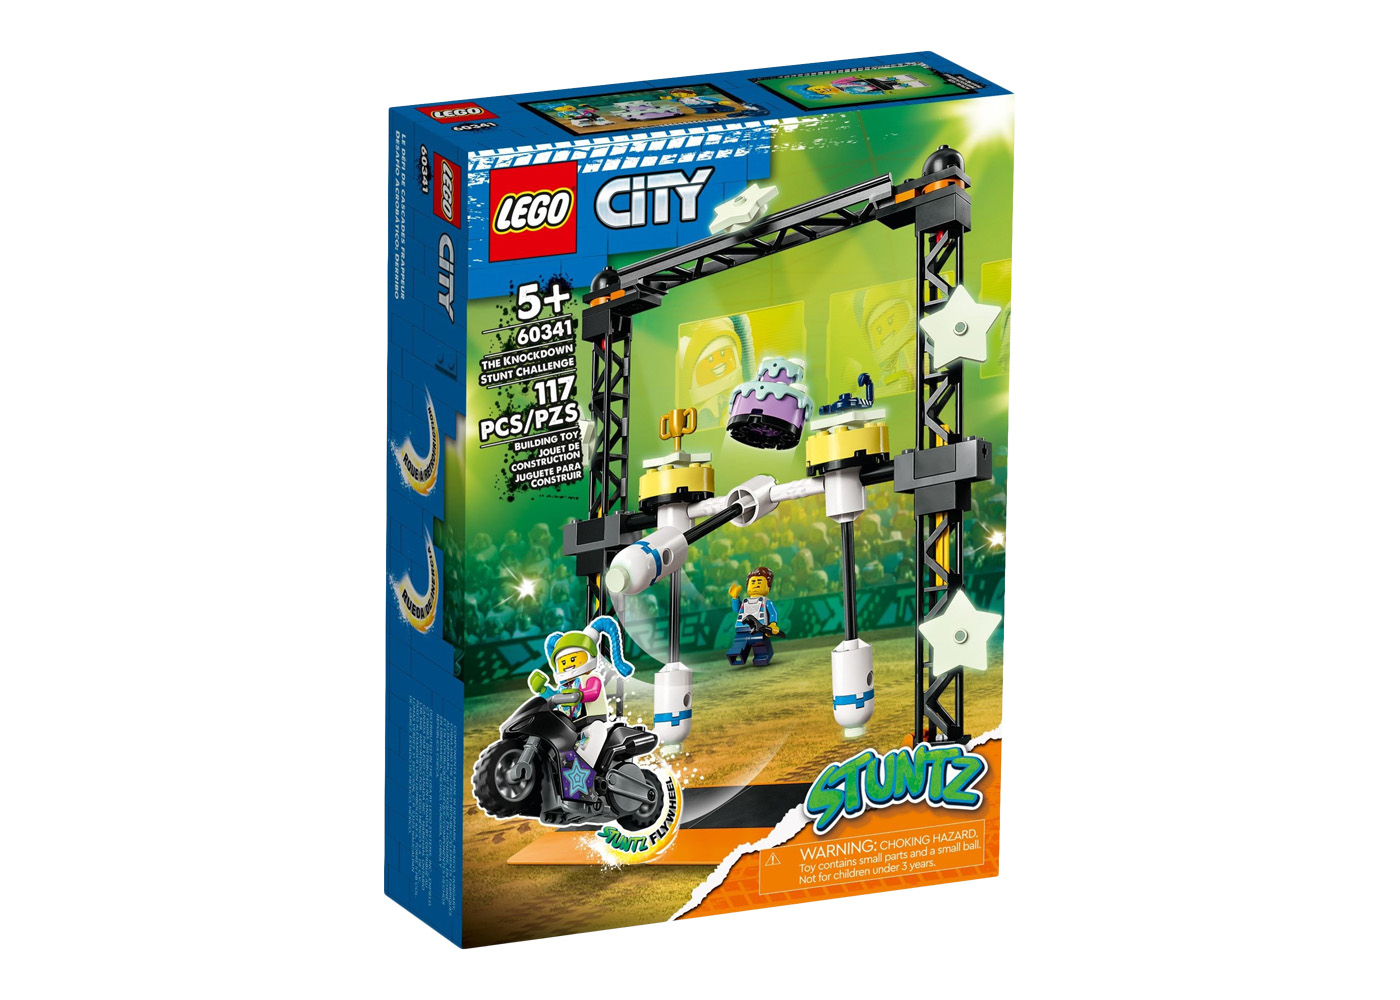 LEGO City Stuntz Bathtub Stunt Bike Set 60333 - US